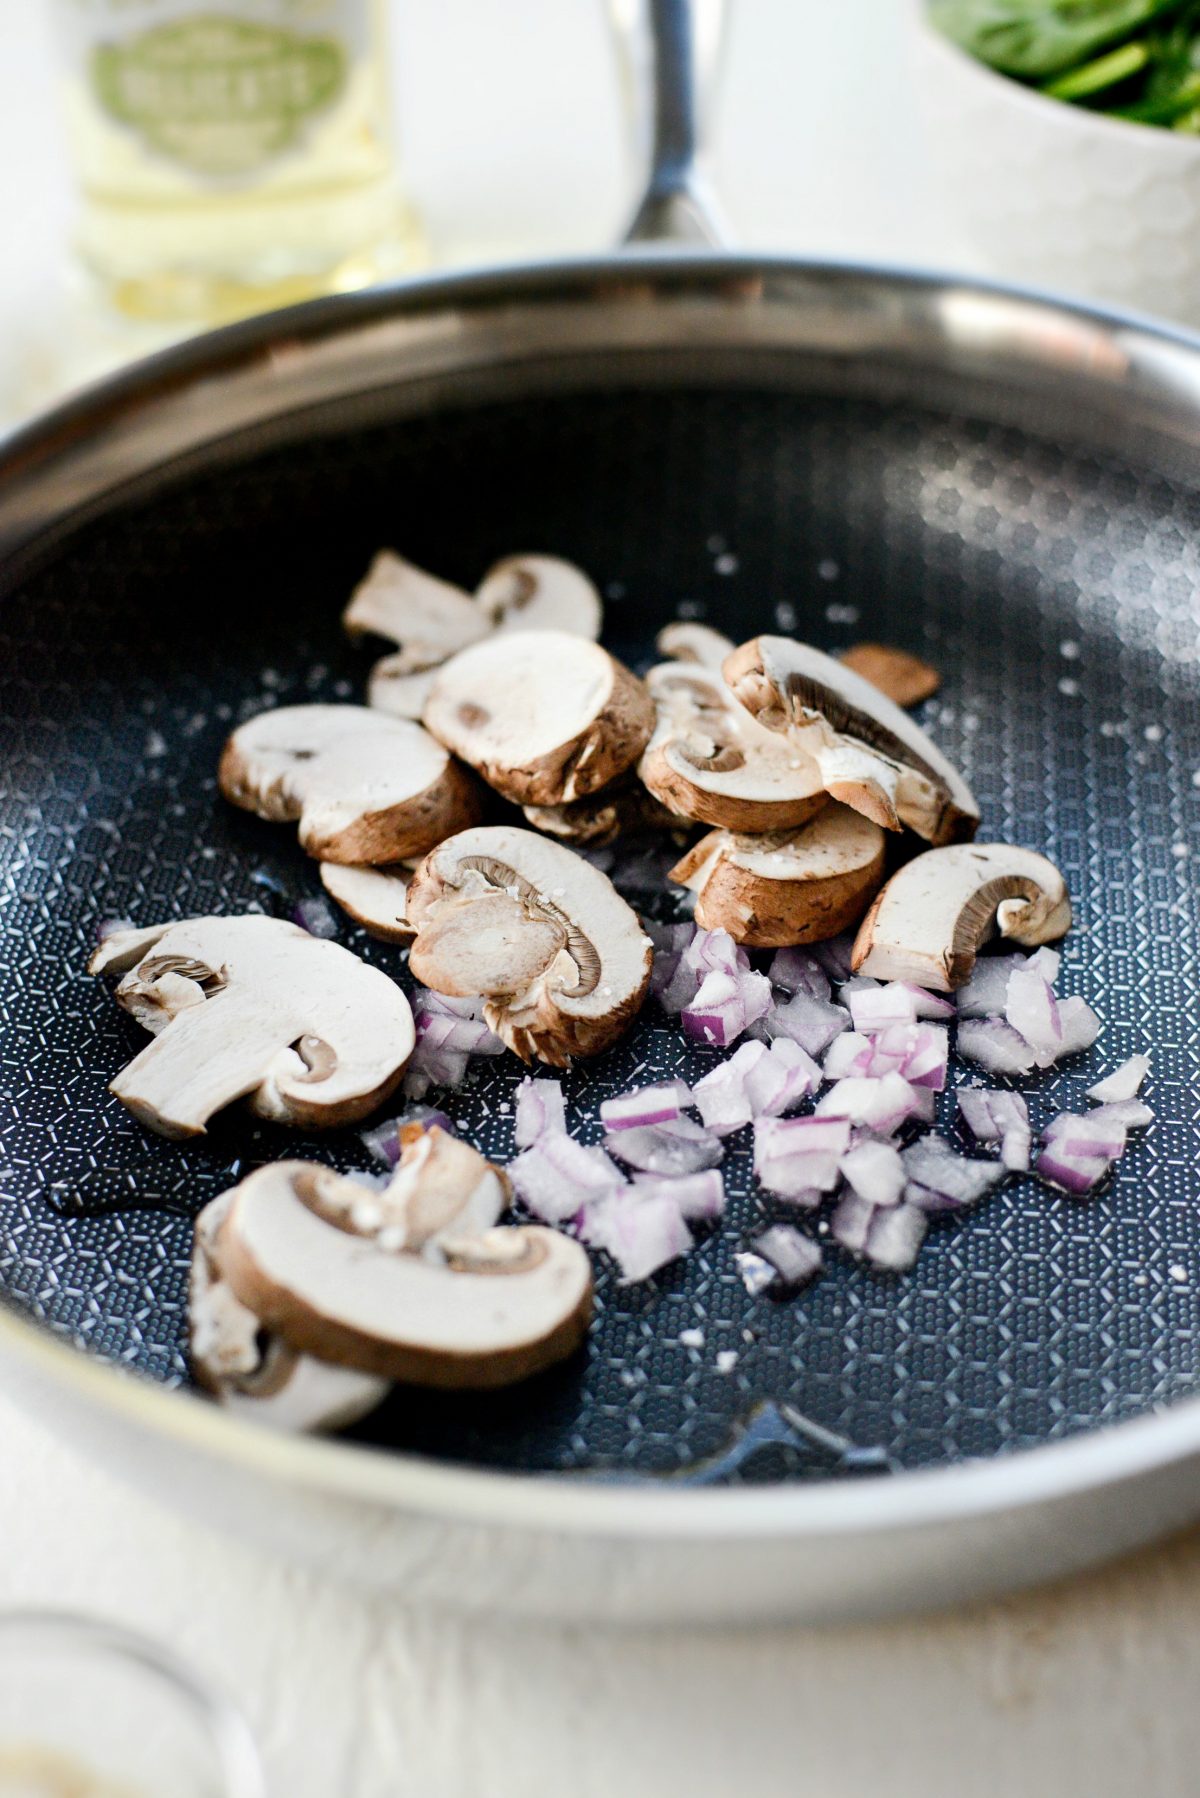 add onion, mushrooms and a pinch of salt